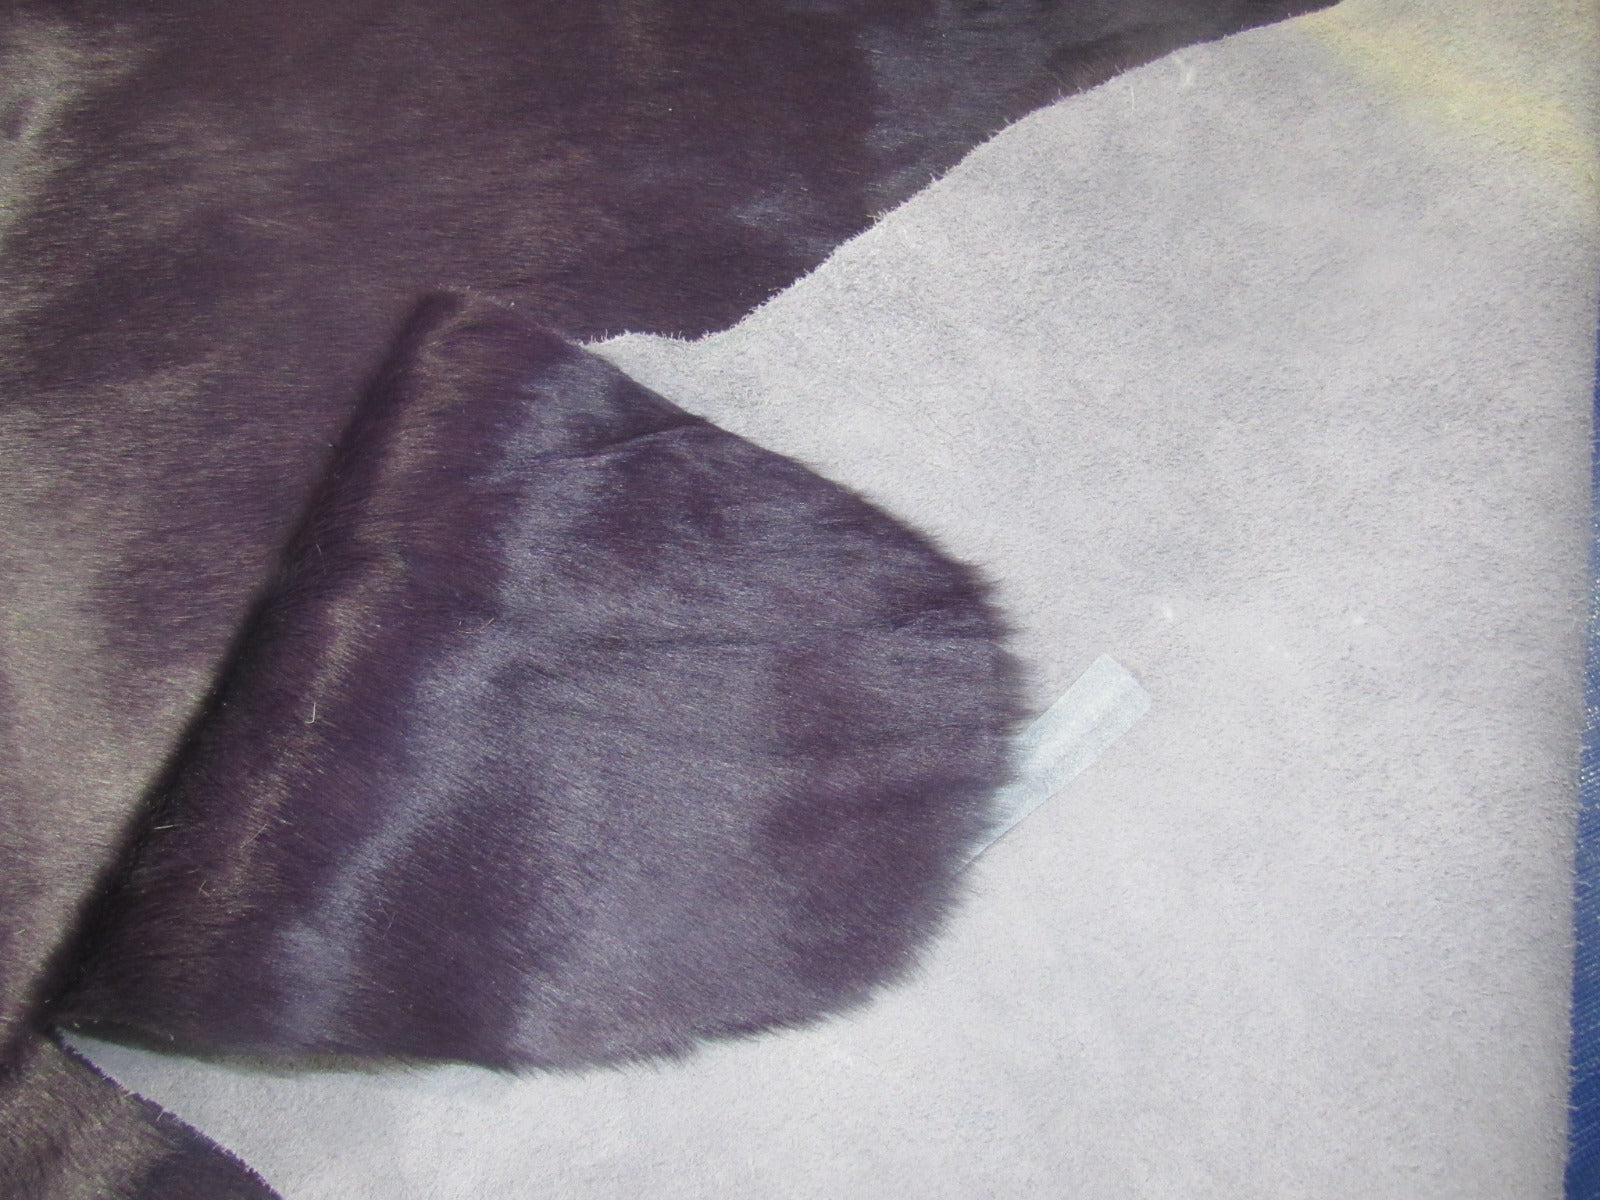 Dyed Purple Cowhide Rug - Size: 7x7 feet K-270